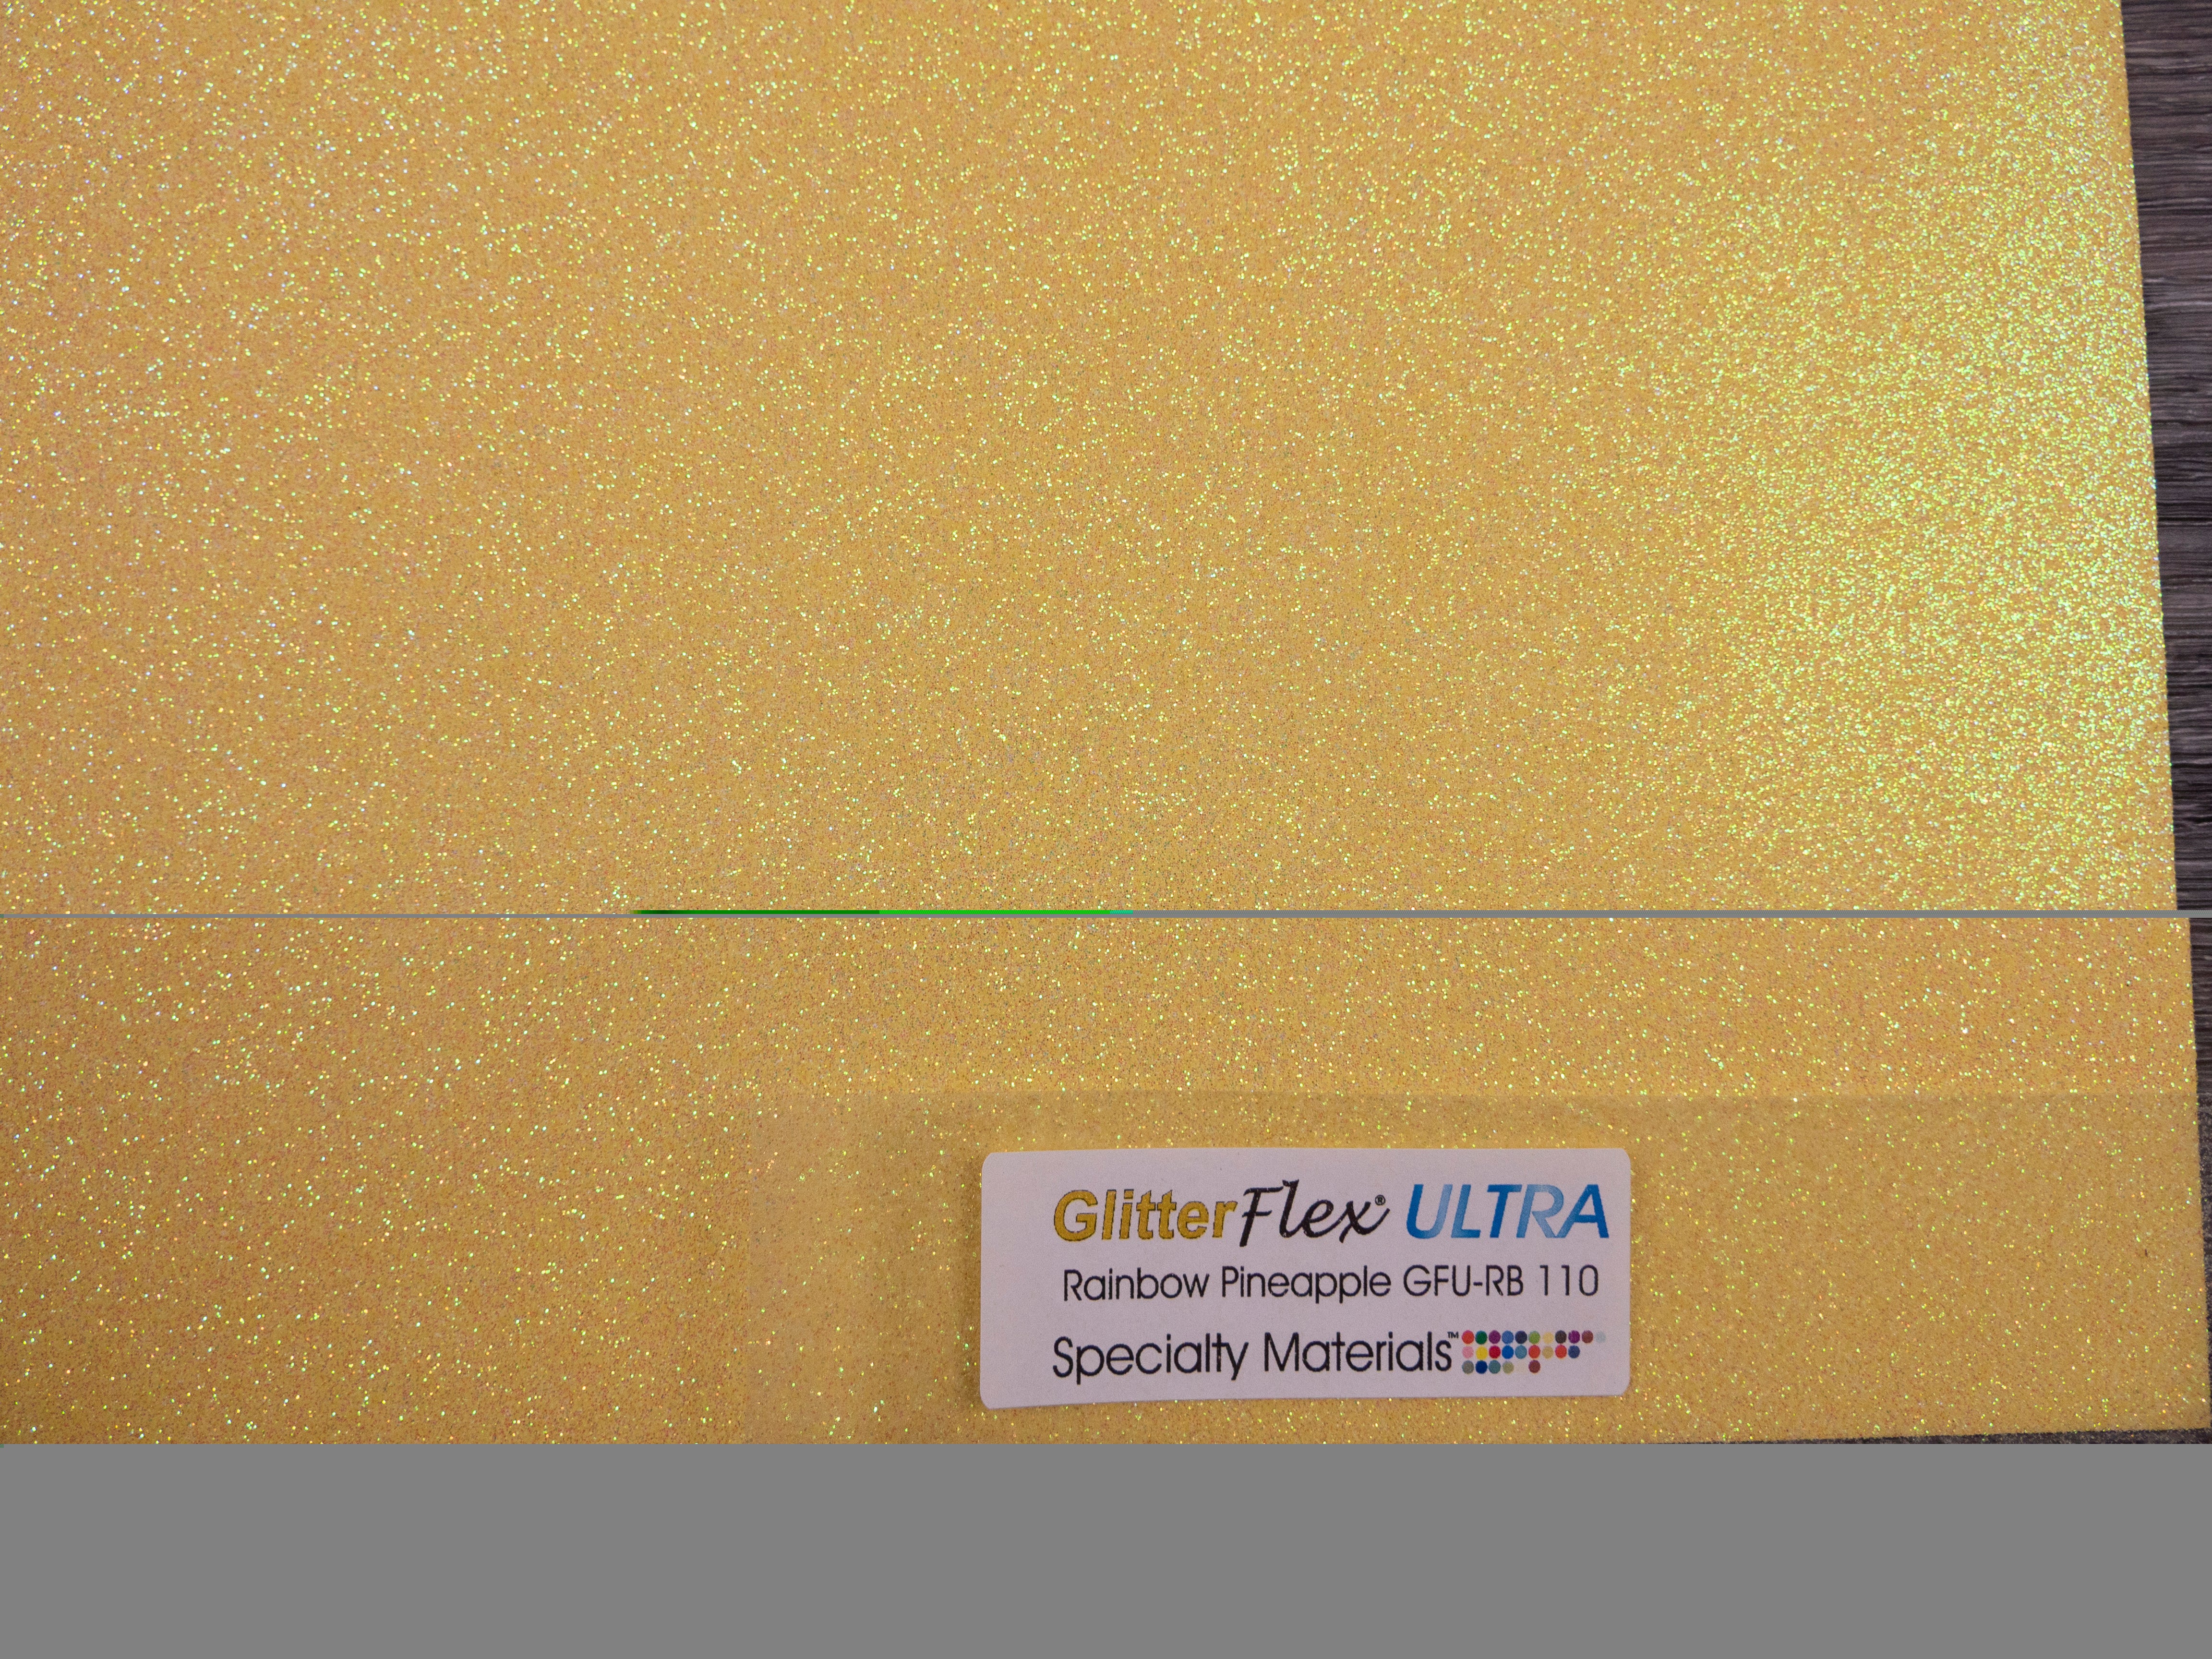 GlitterFlex ULTRA - Rainbow Pineapple